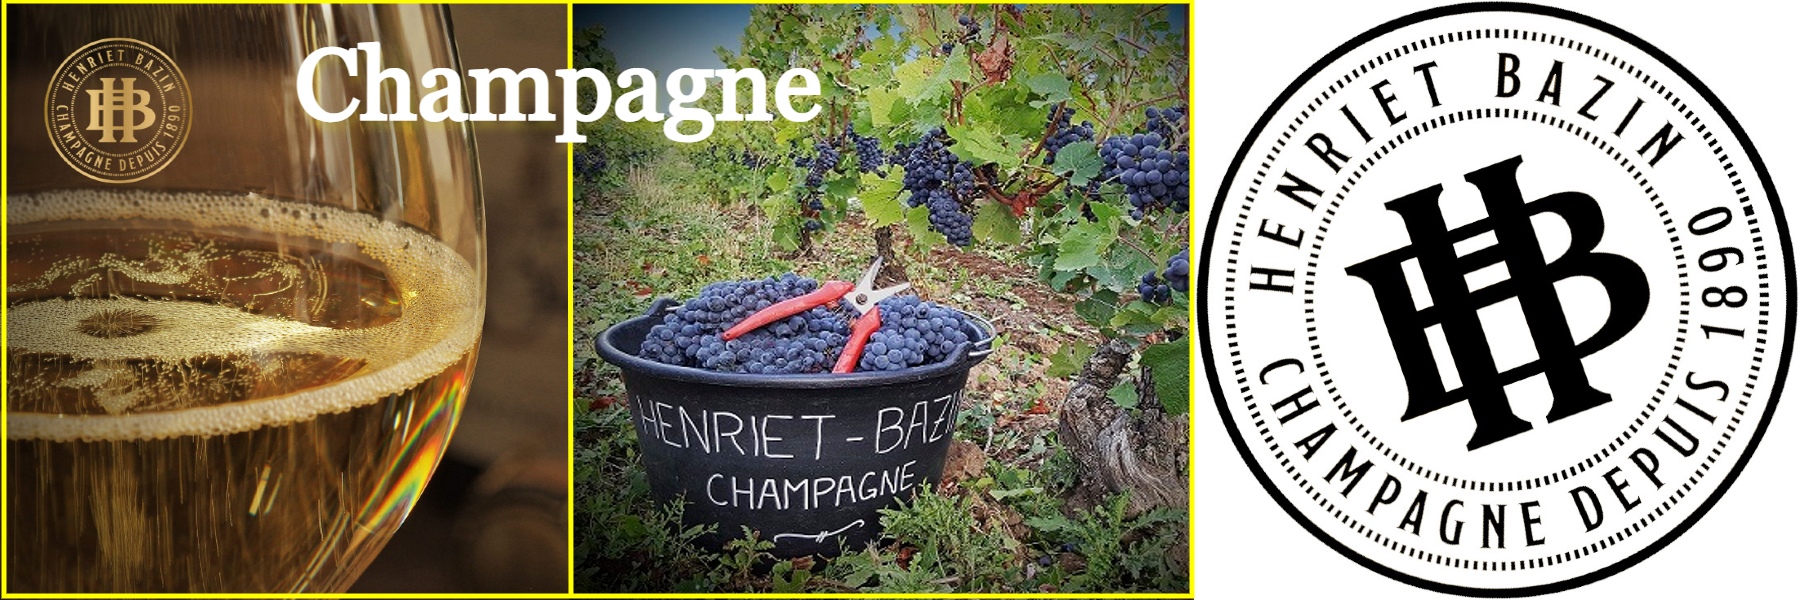 France: Champagne Henriet-Bazin